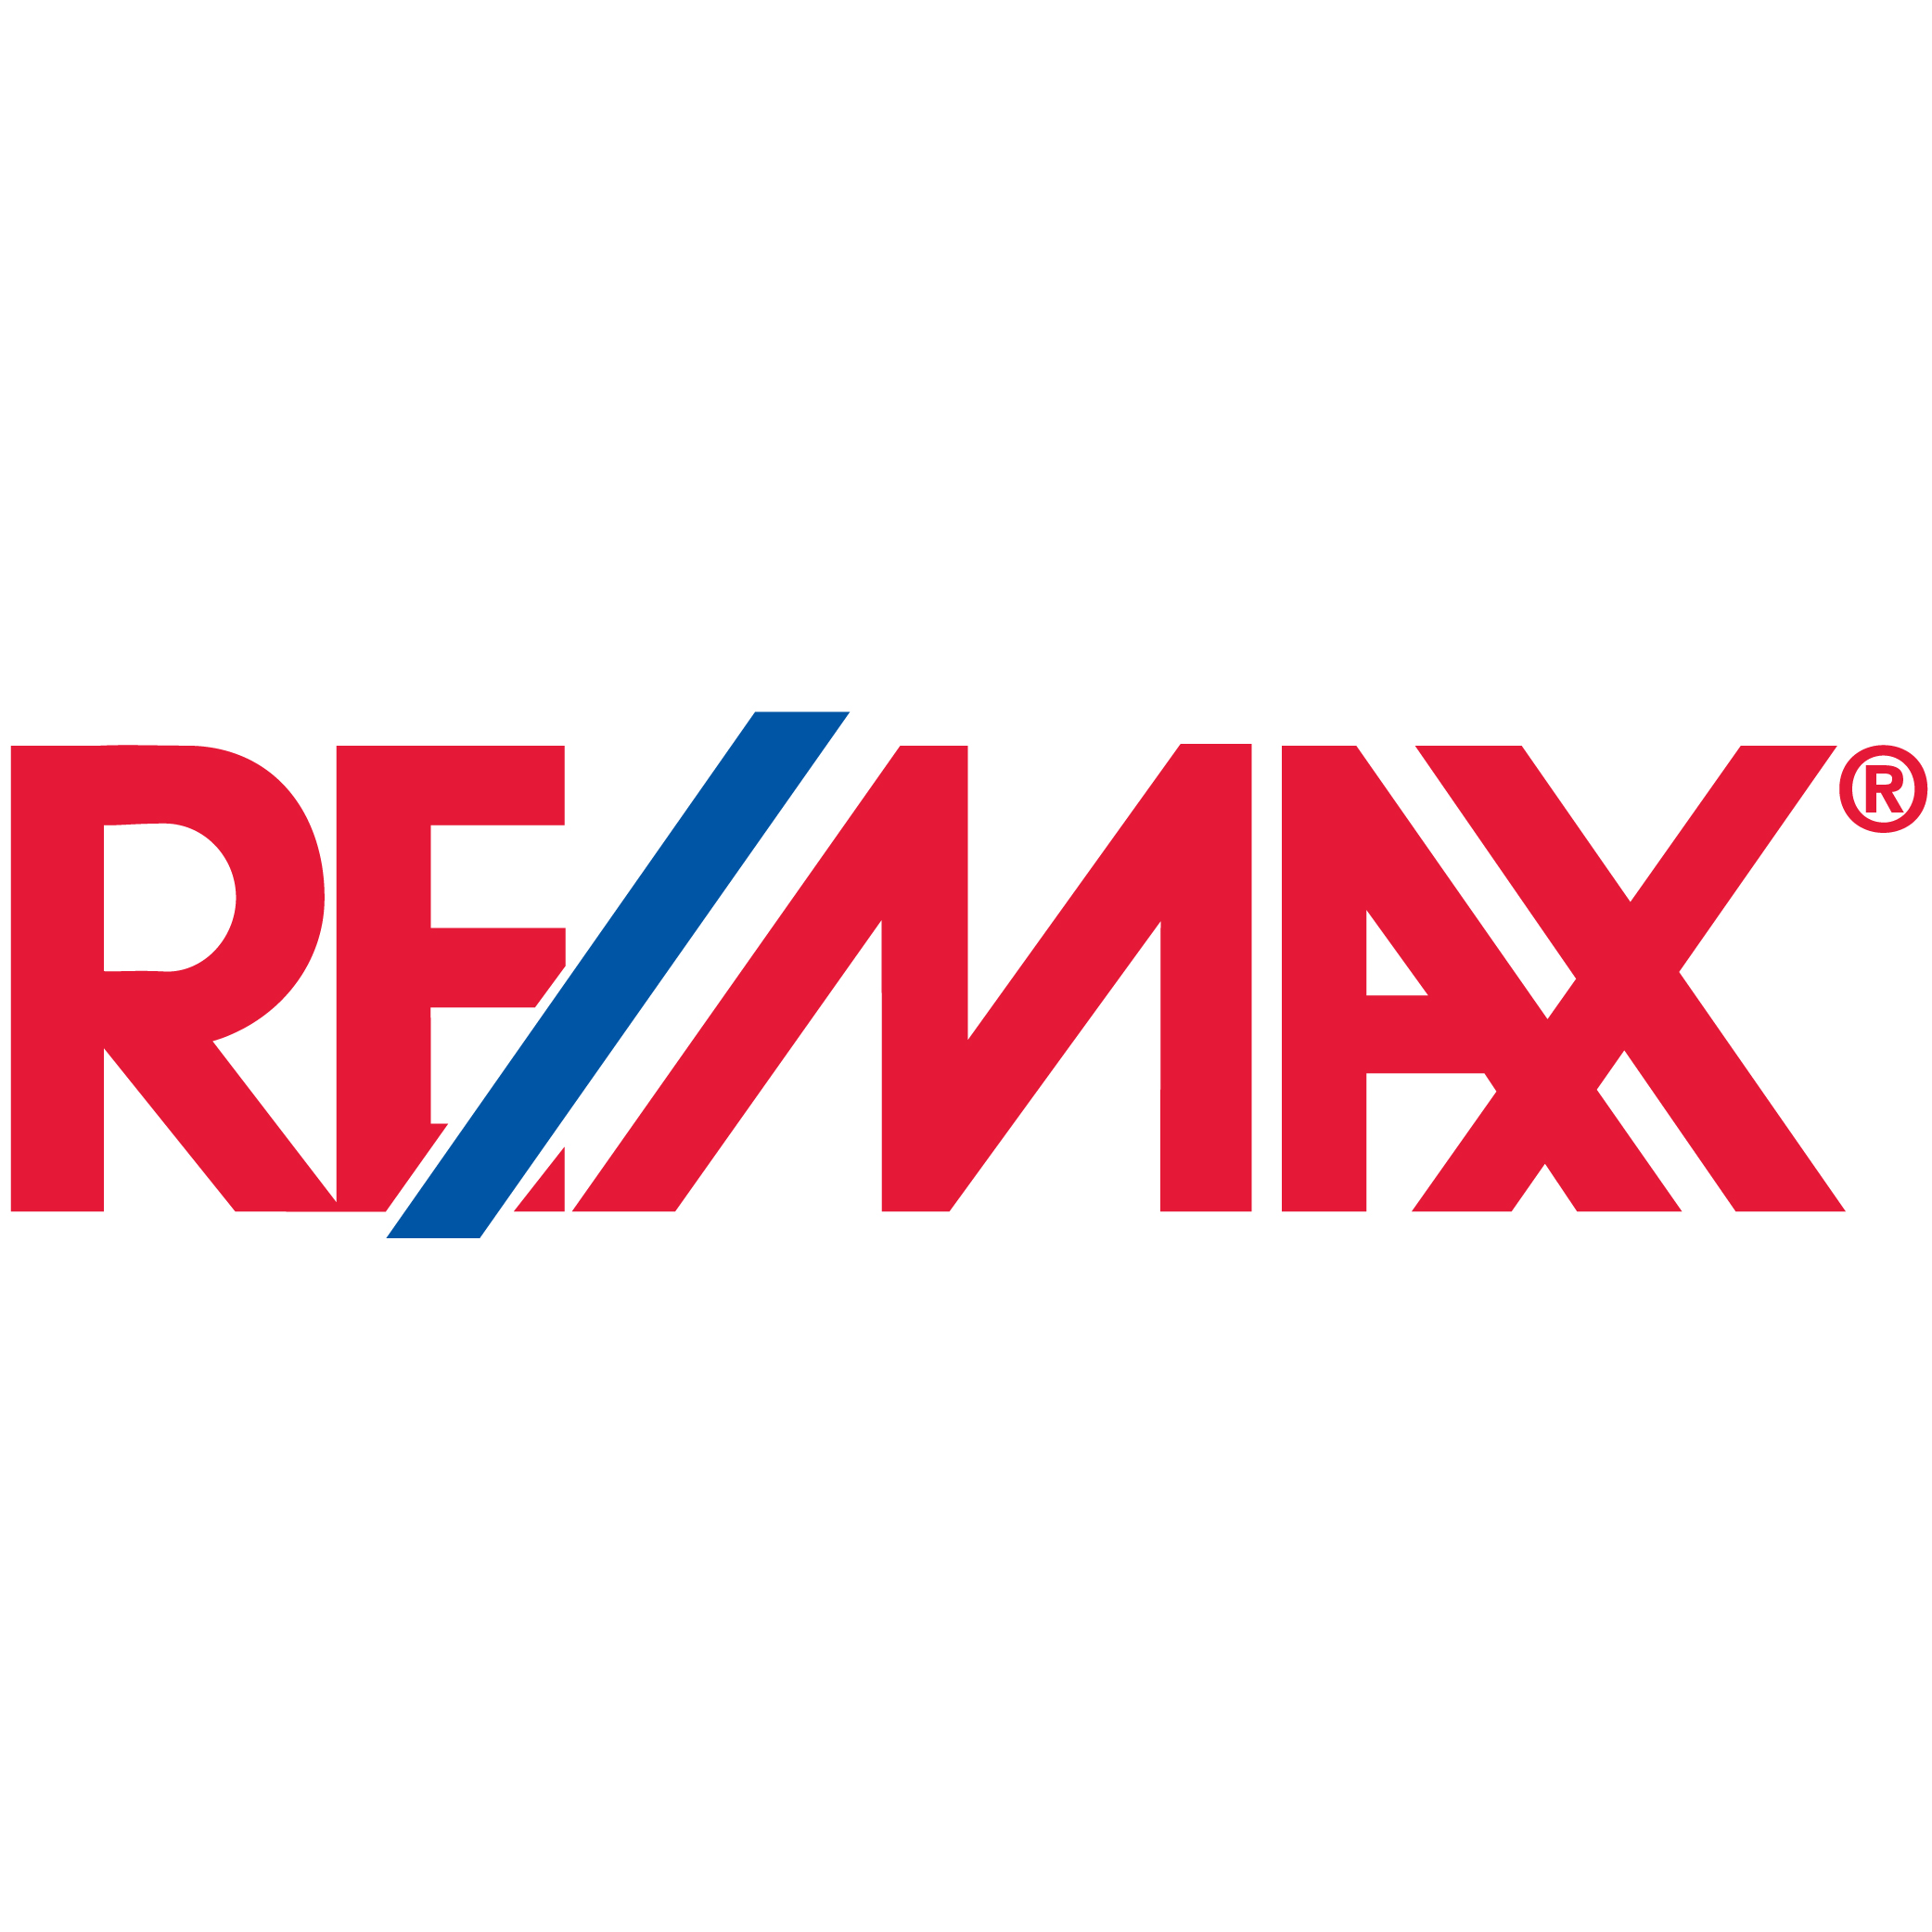 REMAX_logo500w_HiRes.jpg